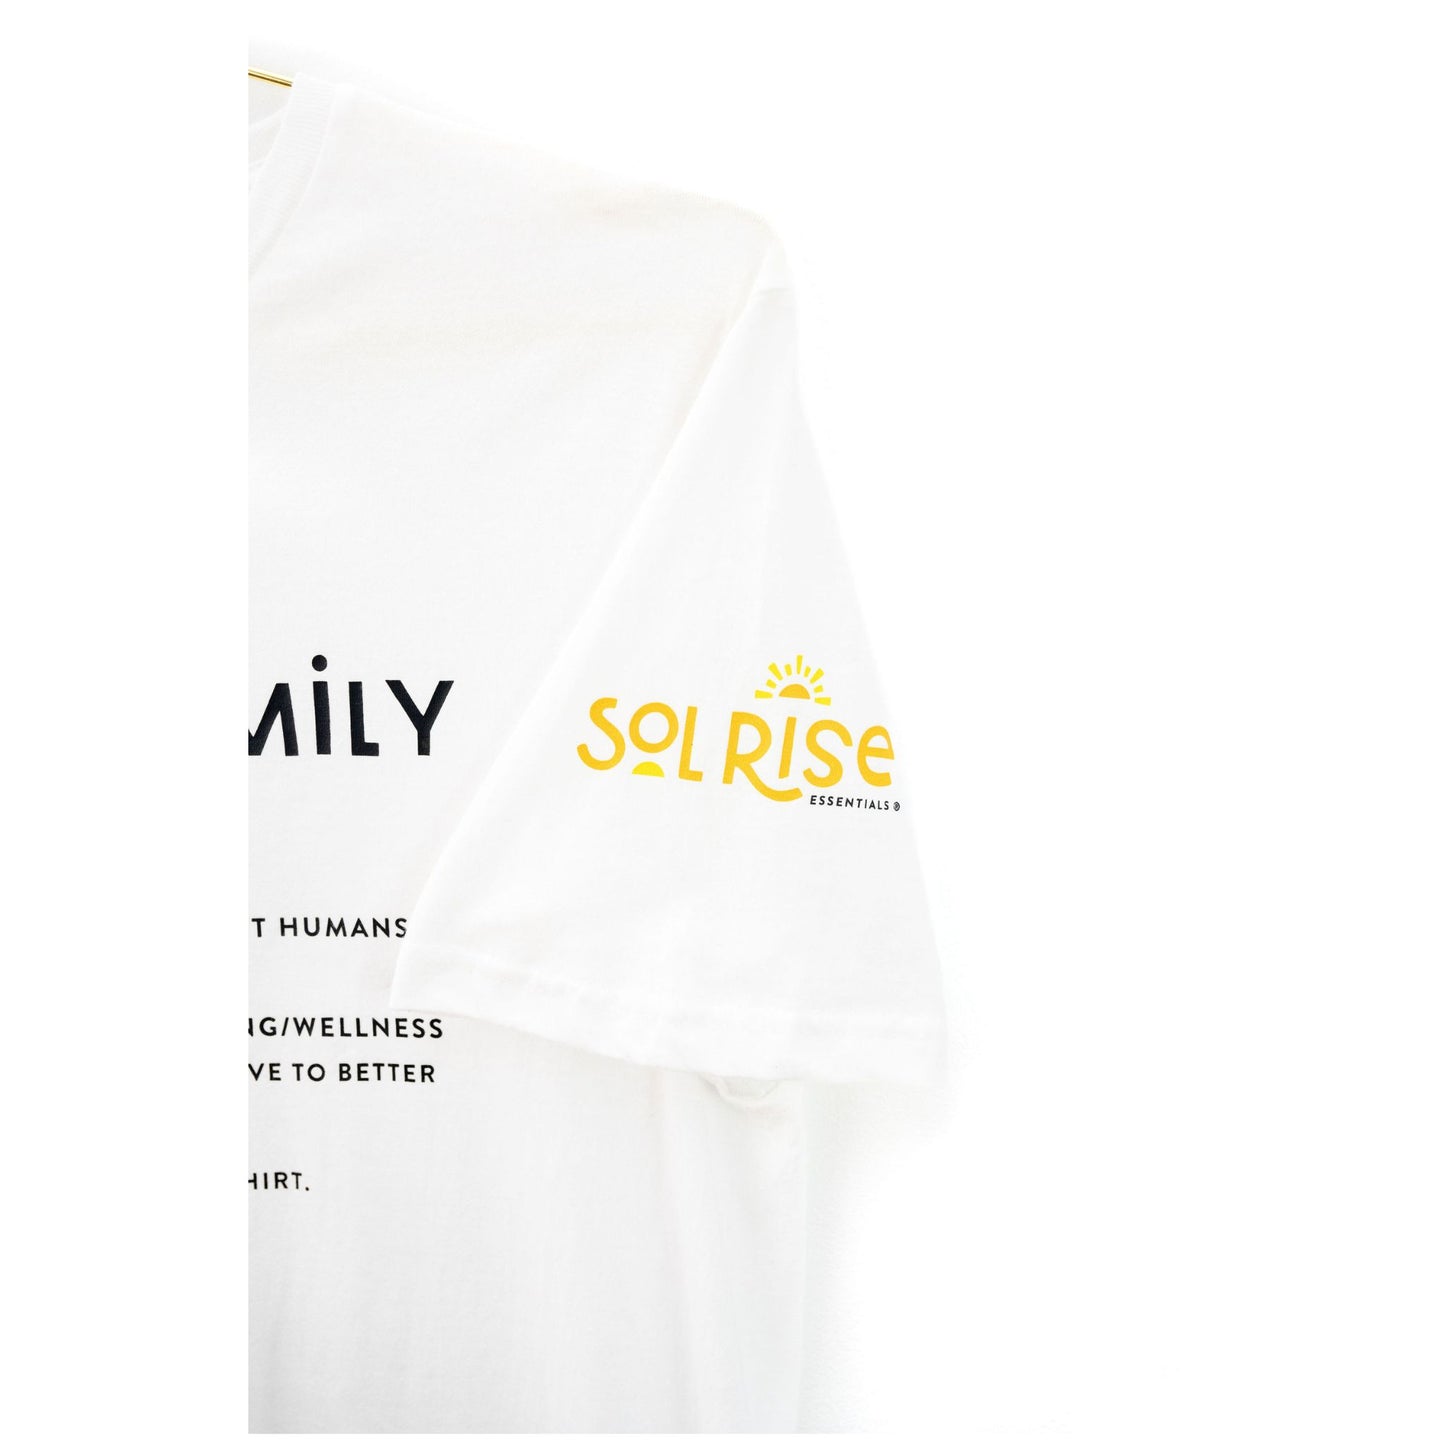 soltribe family definition affirmation mental health merch apparel tee tshirt sol rise essentials logo sleeve